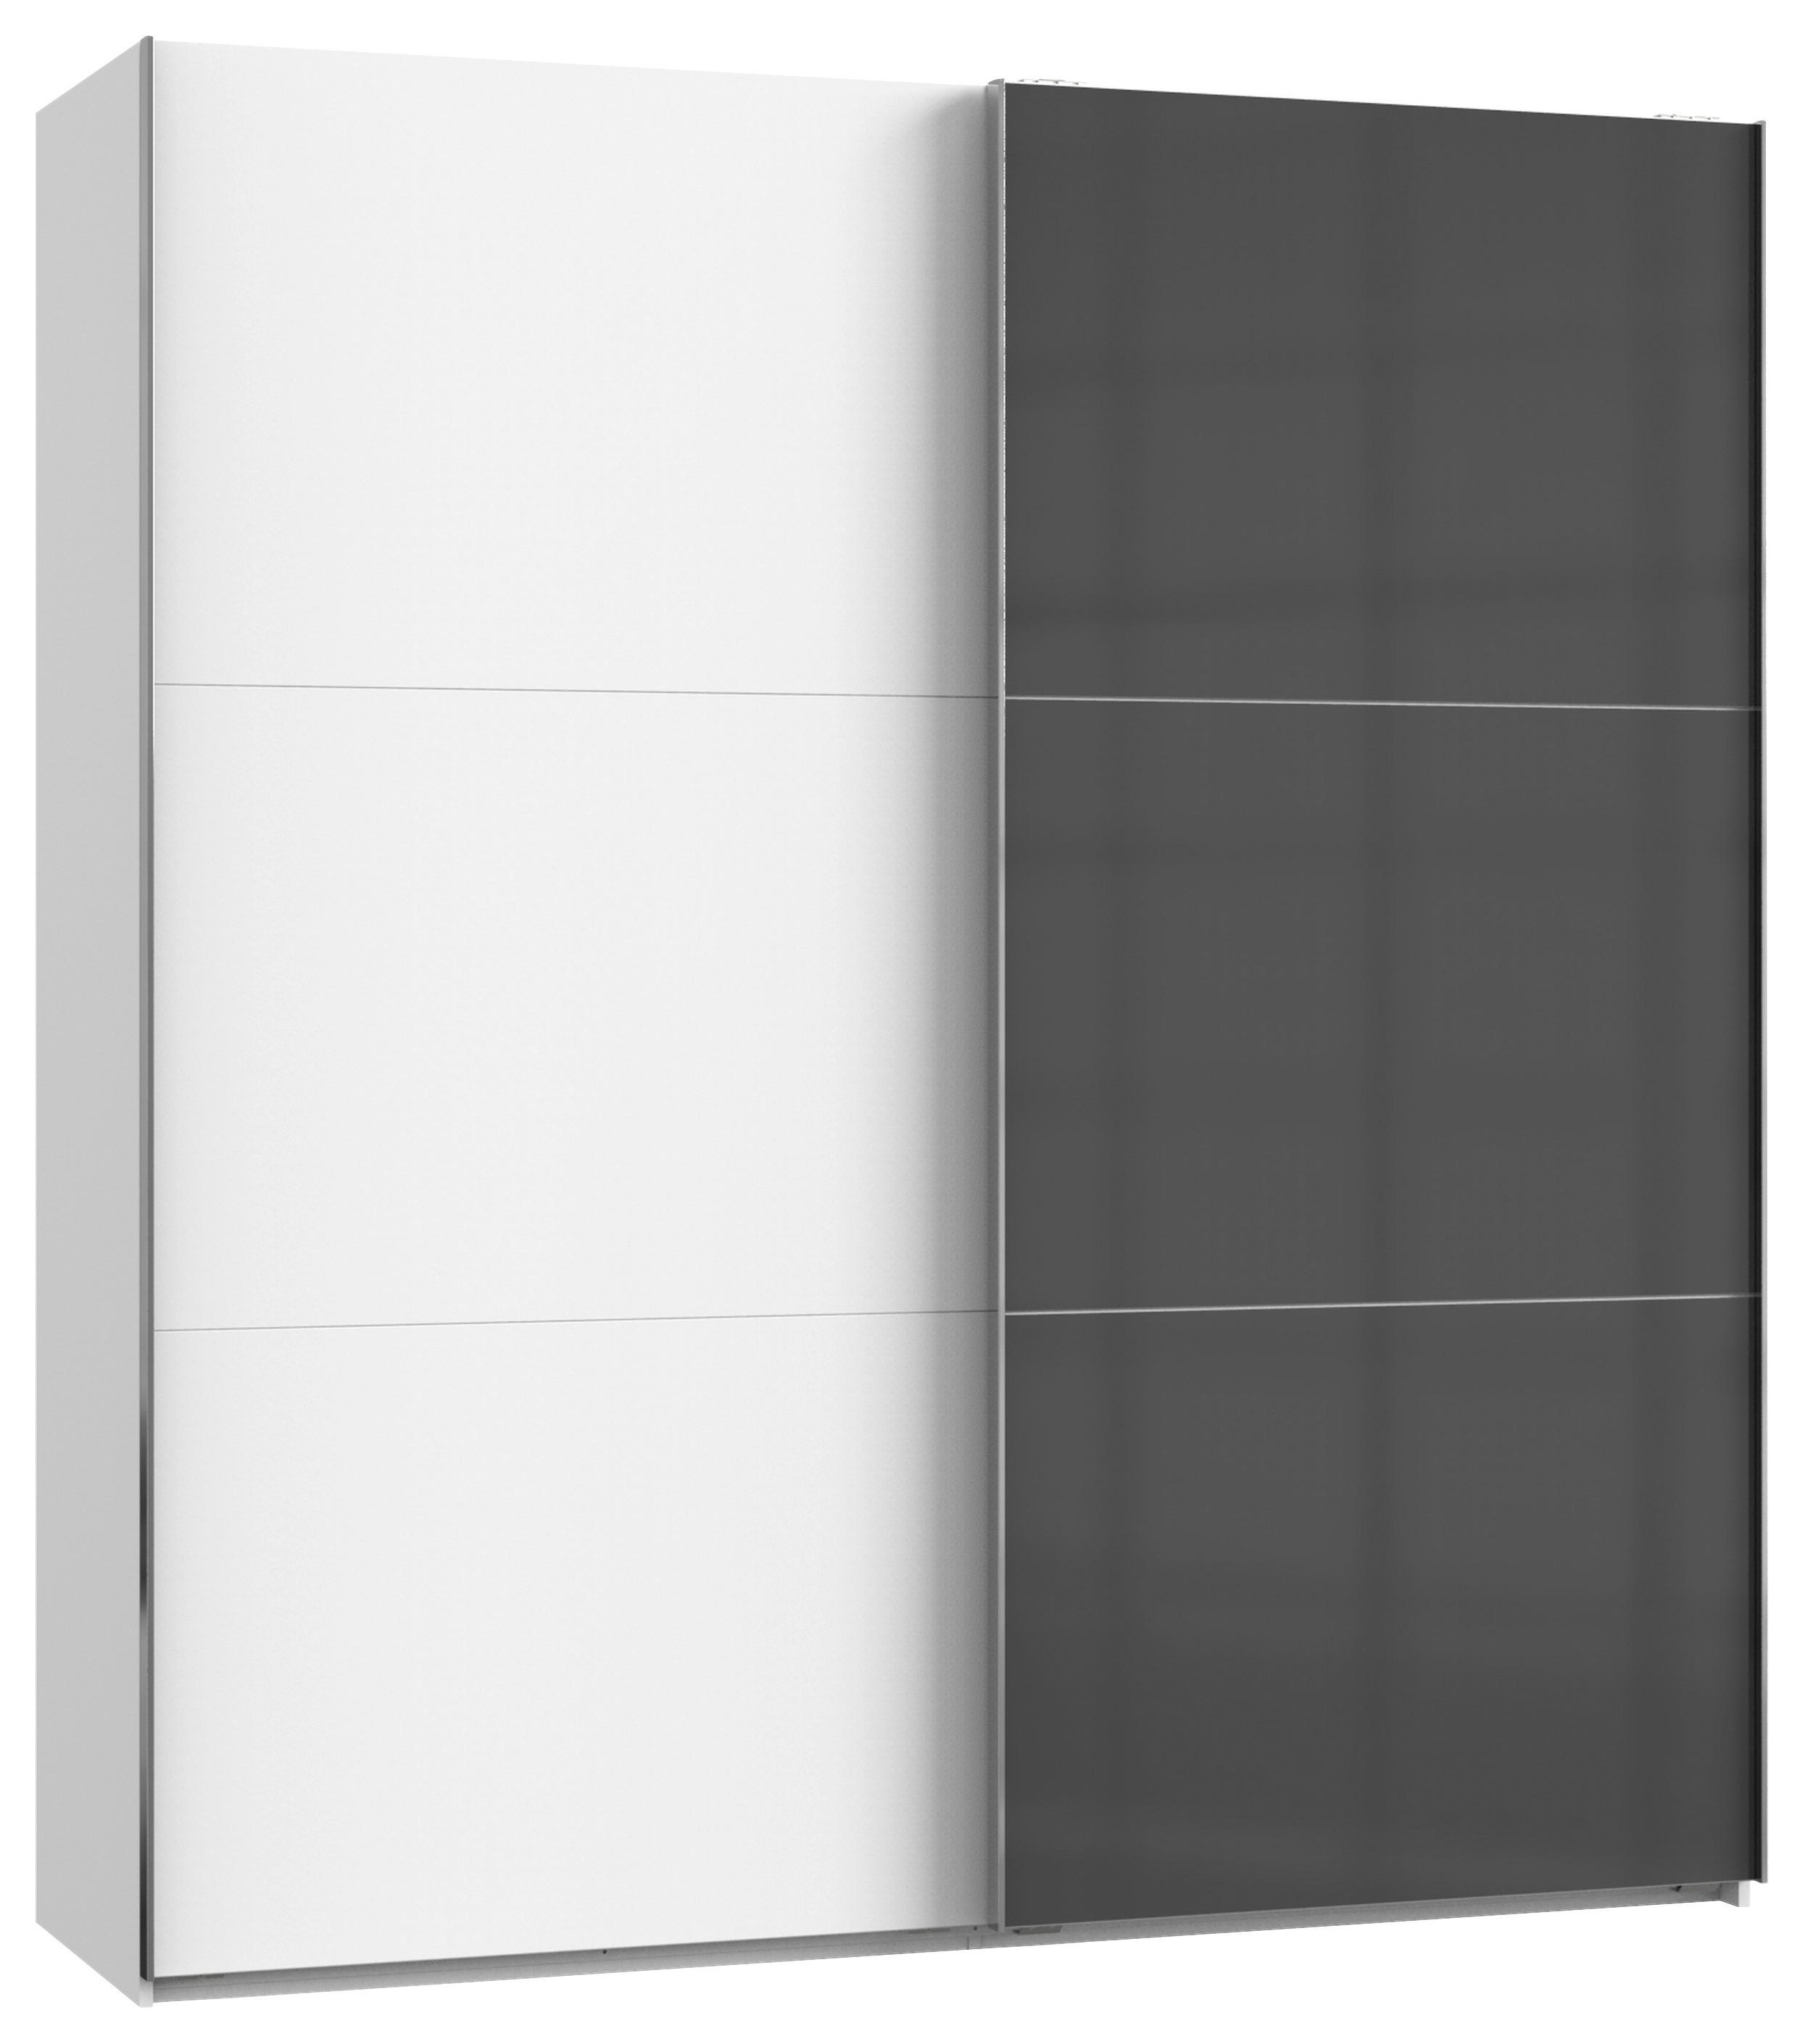 SCHWEBETÜRENSCHRANK 2-türig Grau, Weiß  - Chromfarben/Weiß, MODERN (200/216/65cm) - MID.YOU